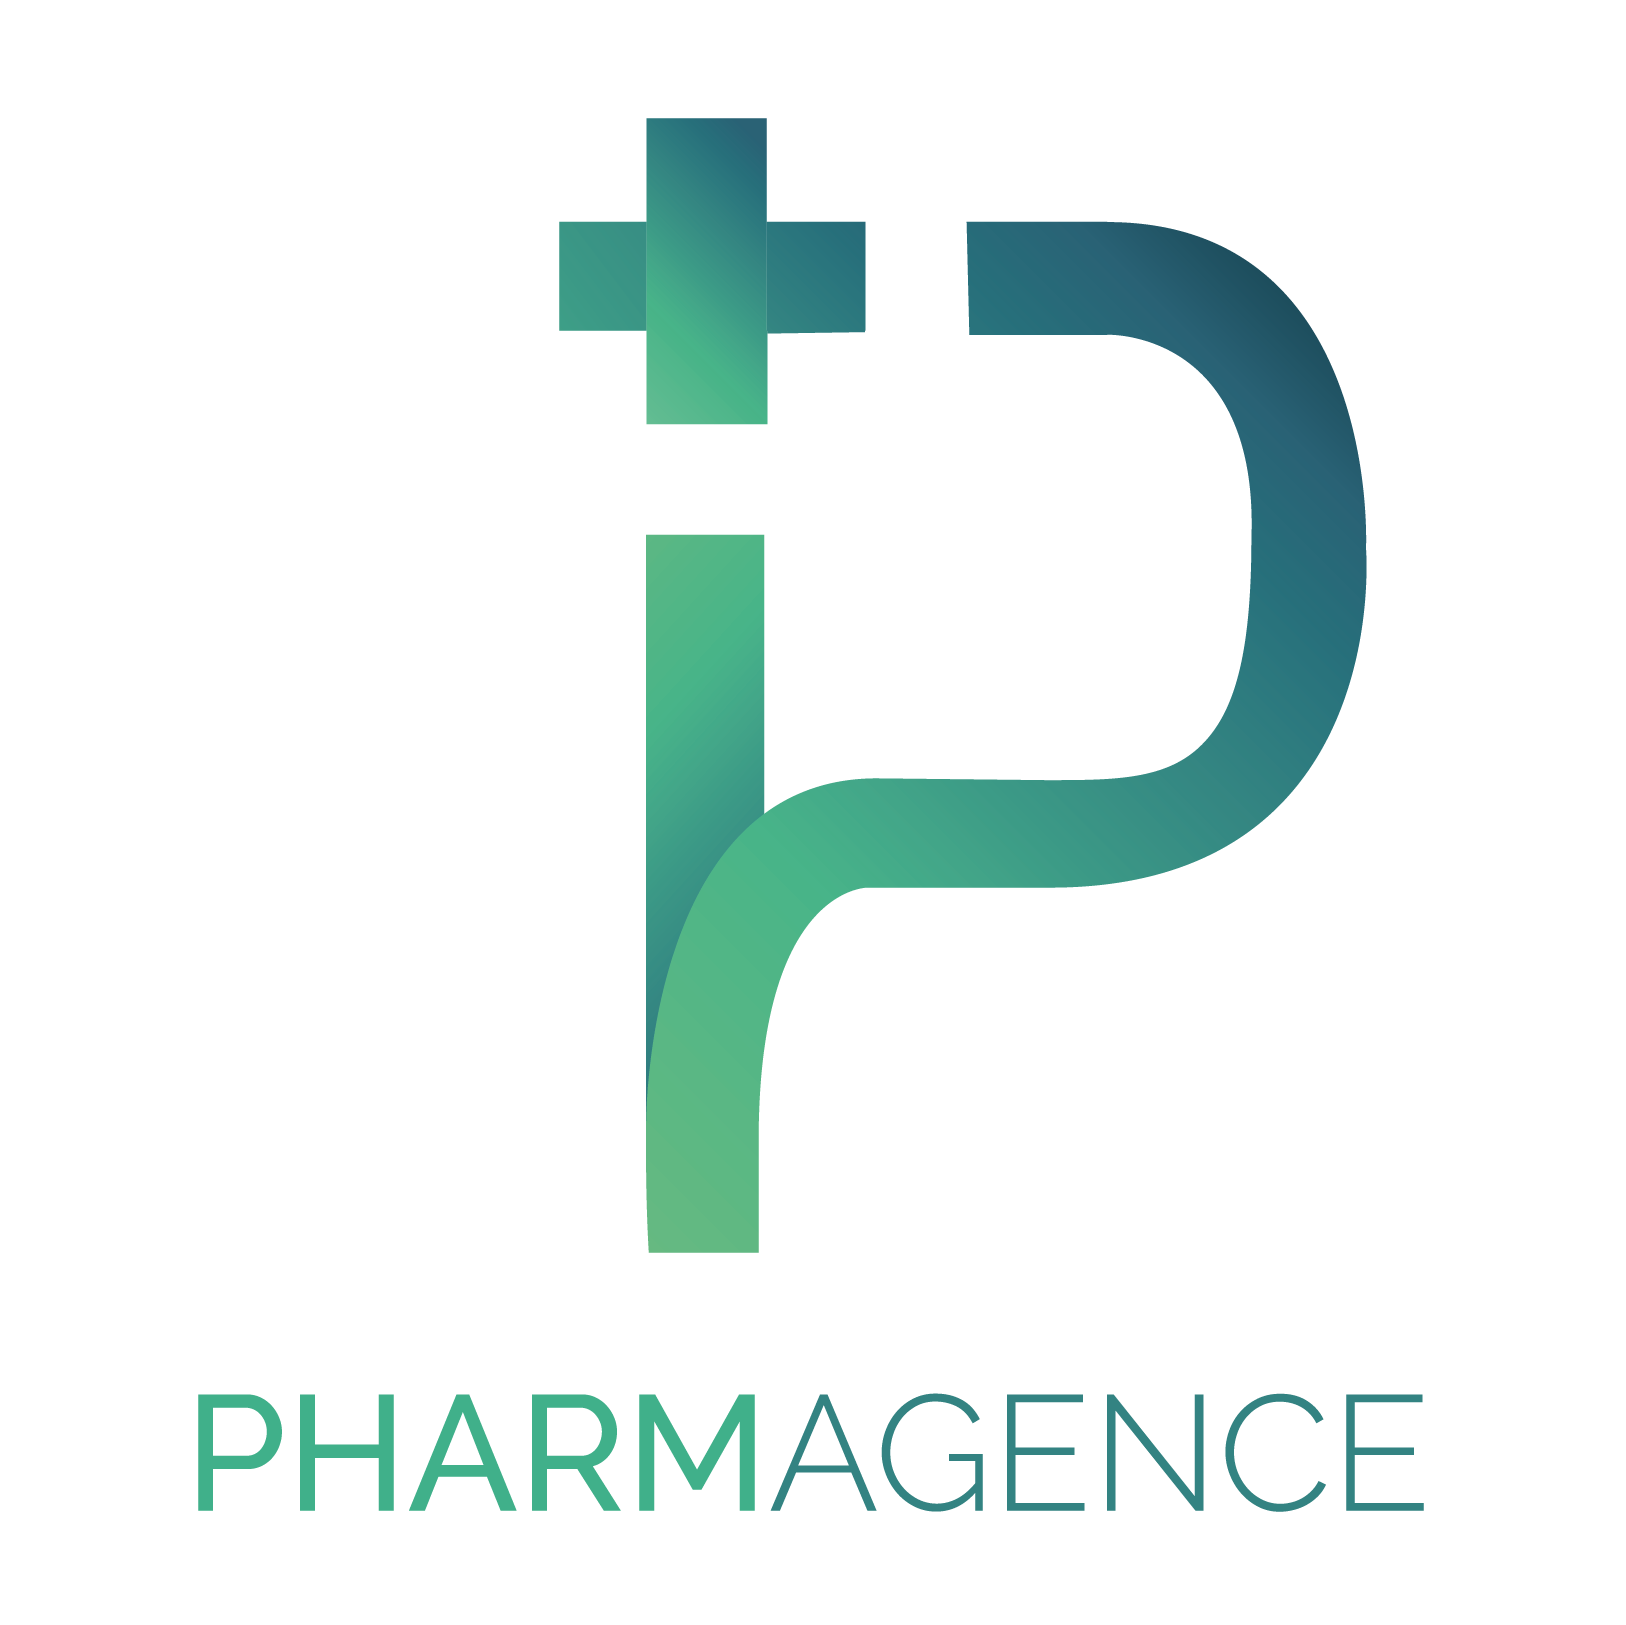 Pharmagence